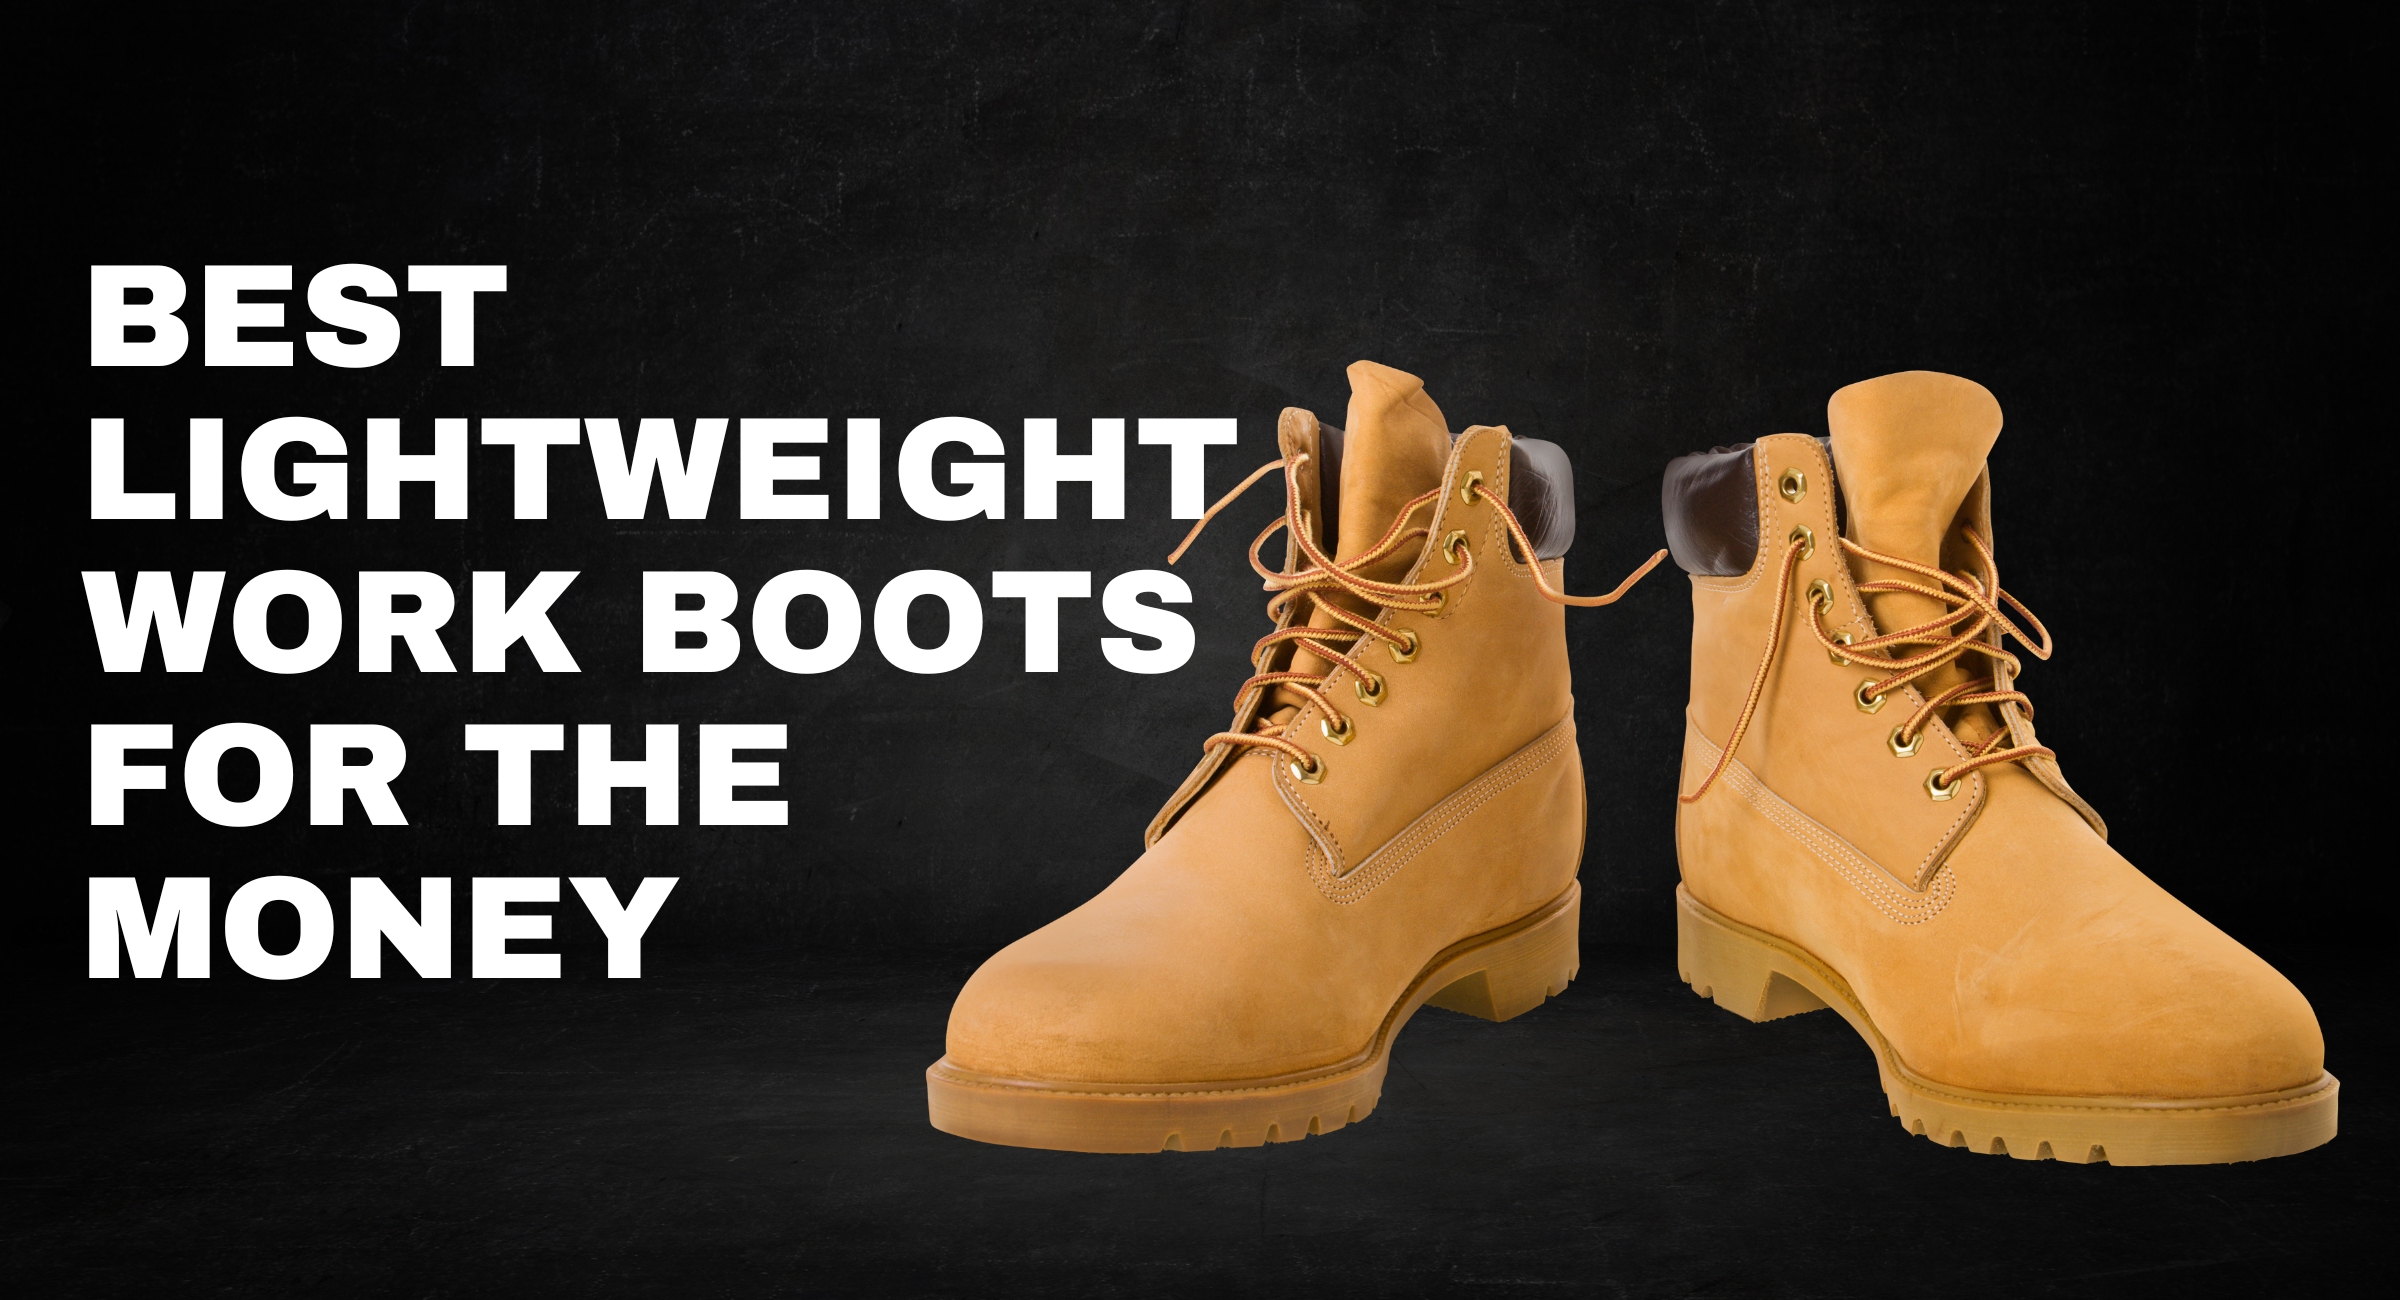 Best Lightweight Work Boots For the Money